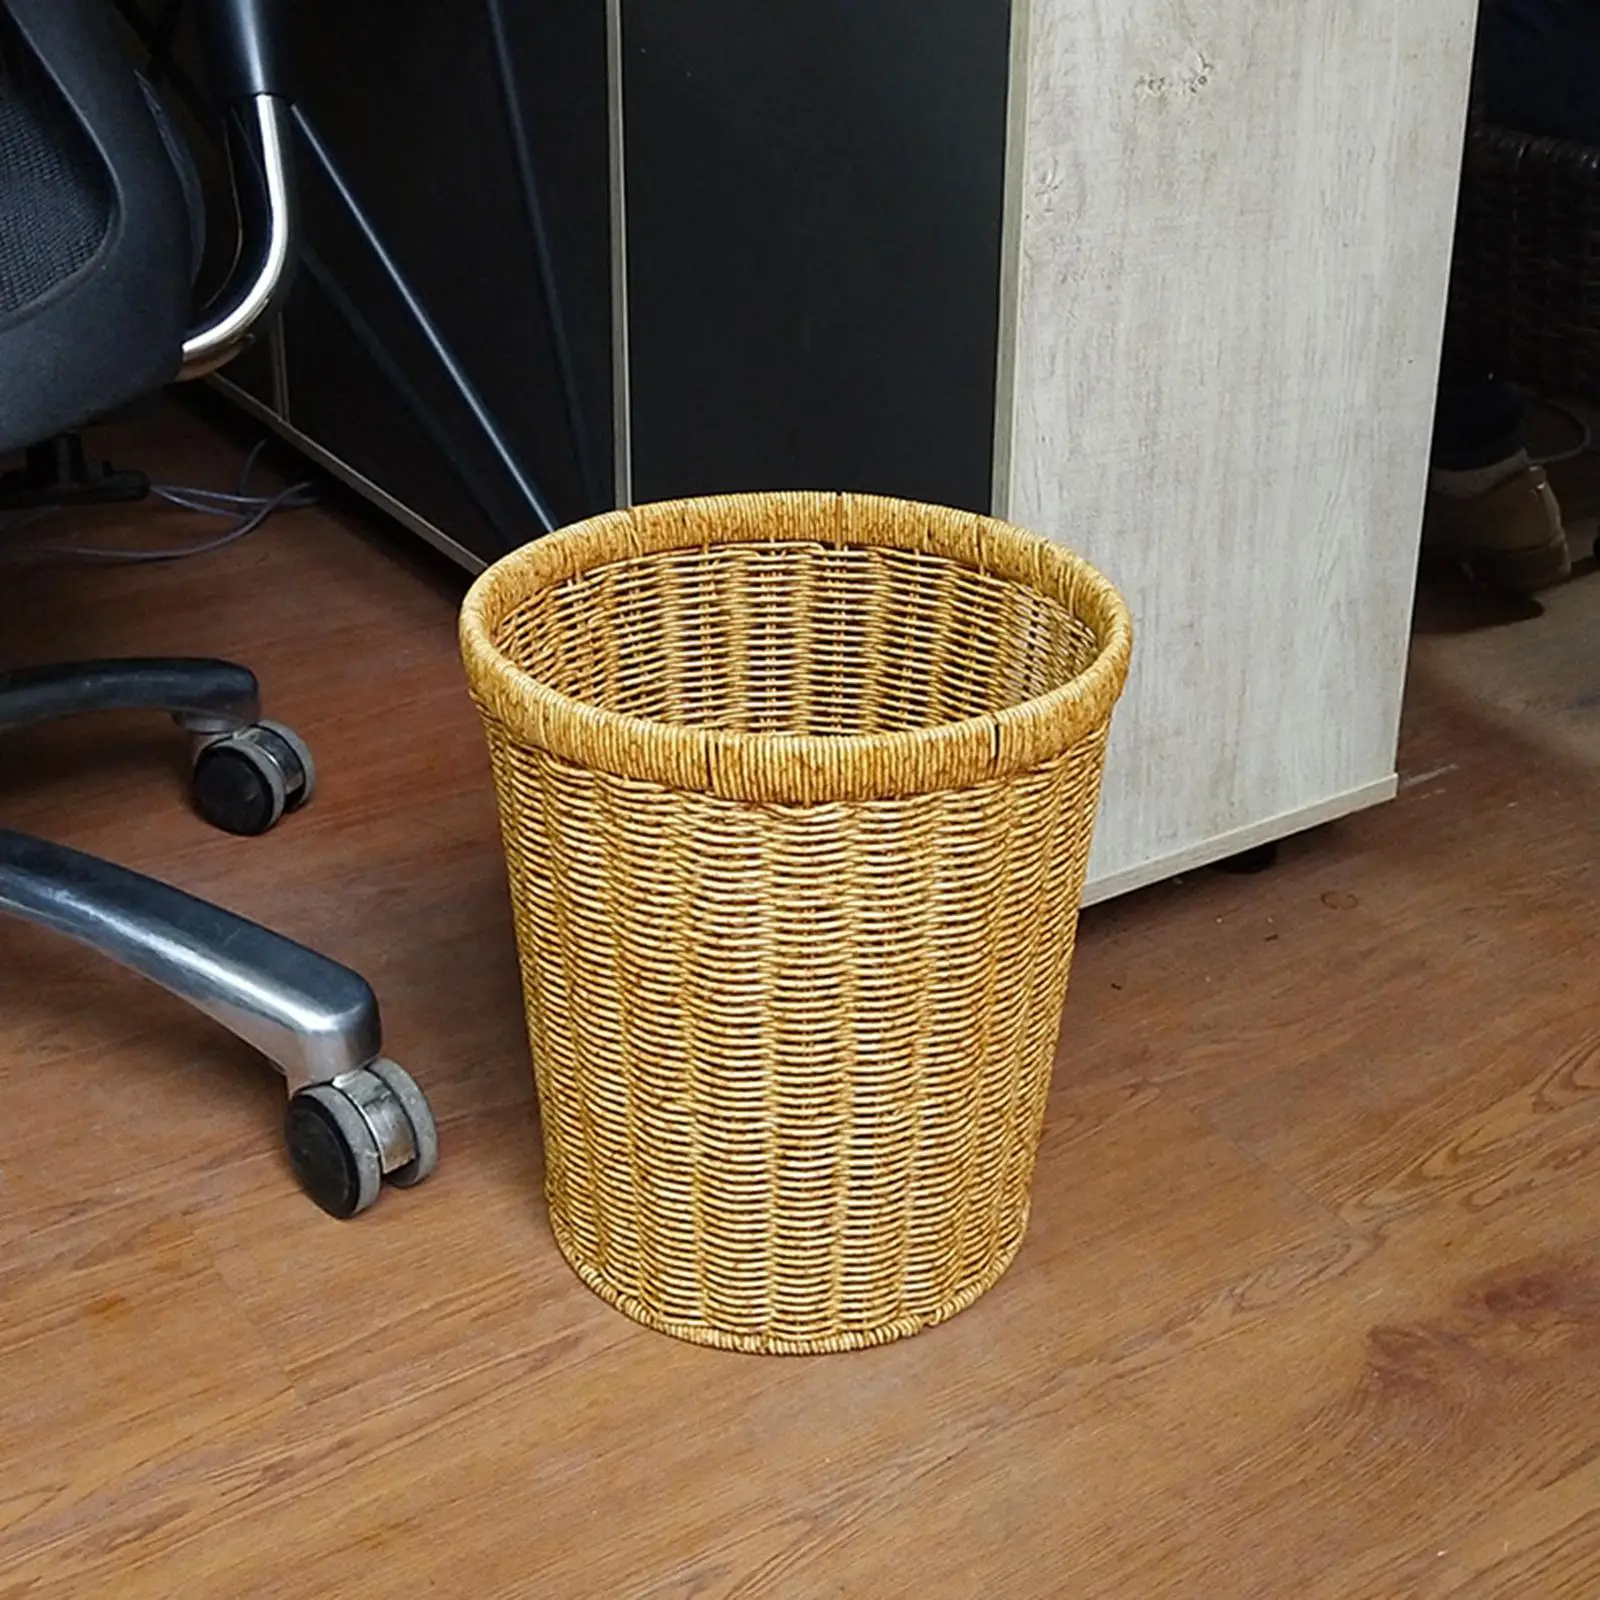 Imitation Rattan Basket Laundry Basket Sundries Storage Basket Sundries Garbage Can for Laundry Room Nursery Dorm Bathroom